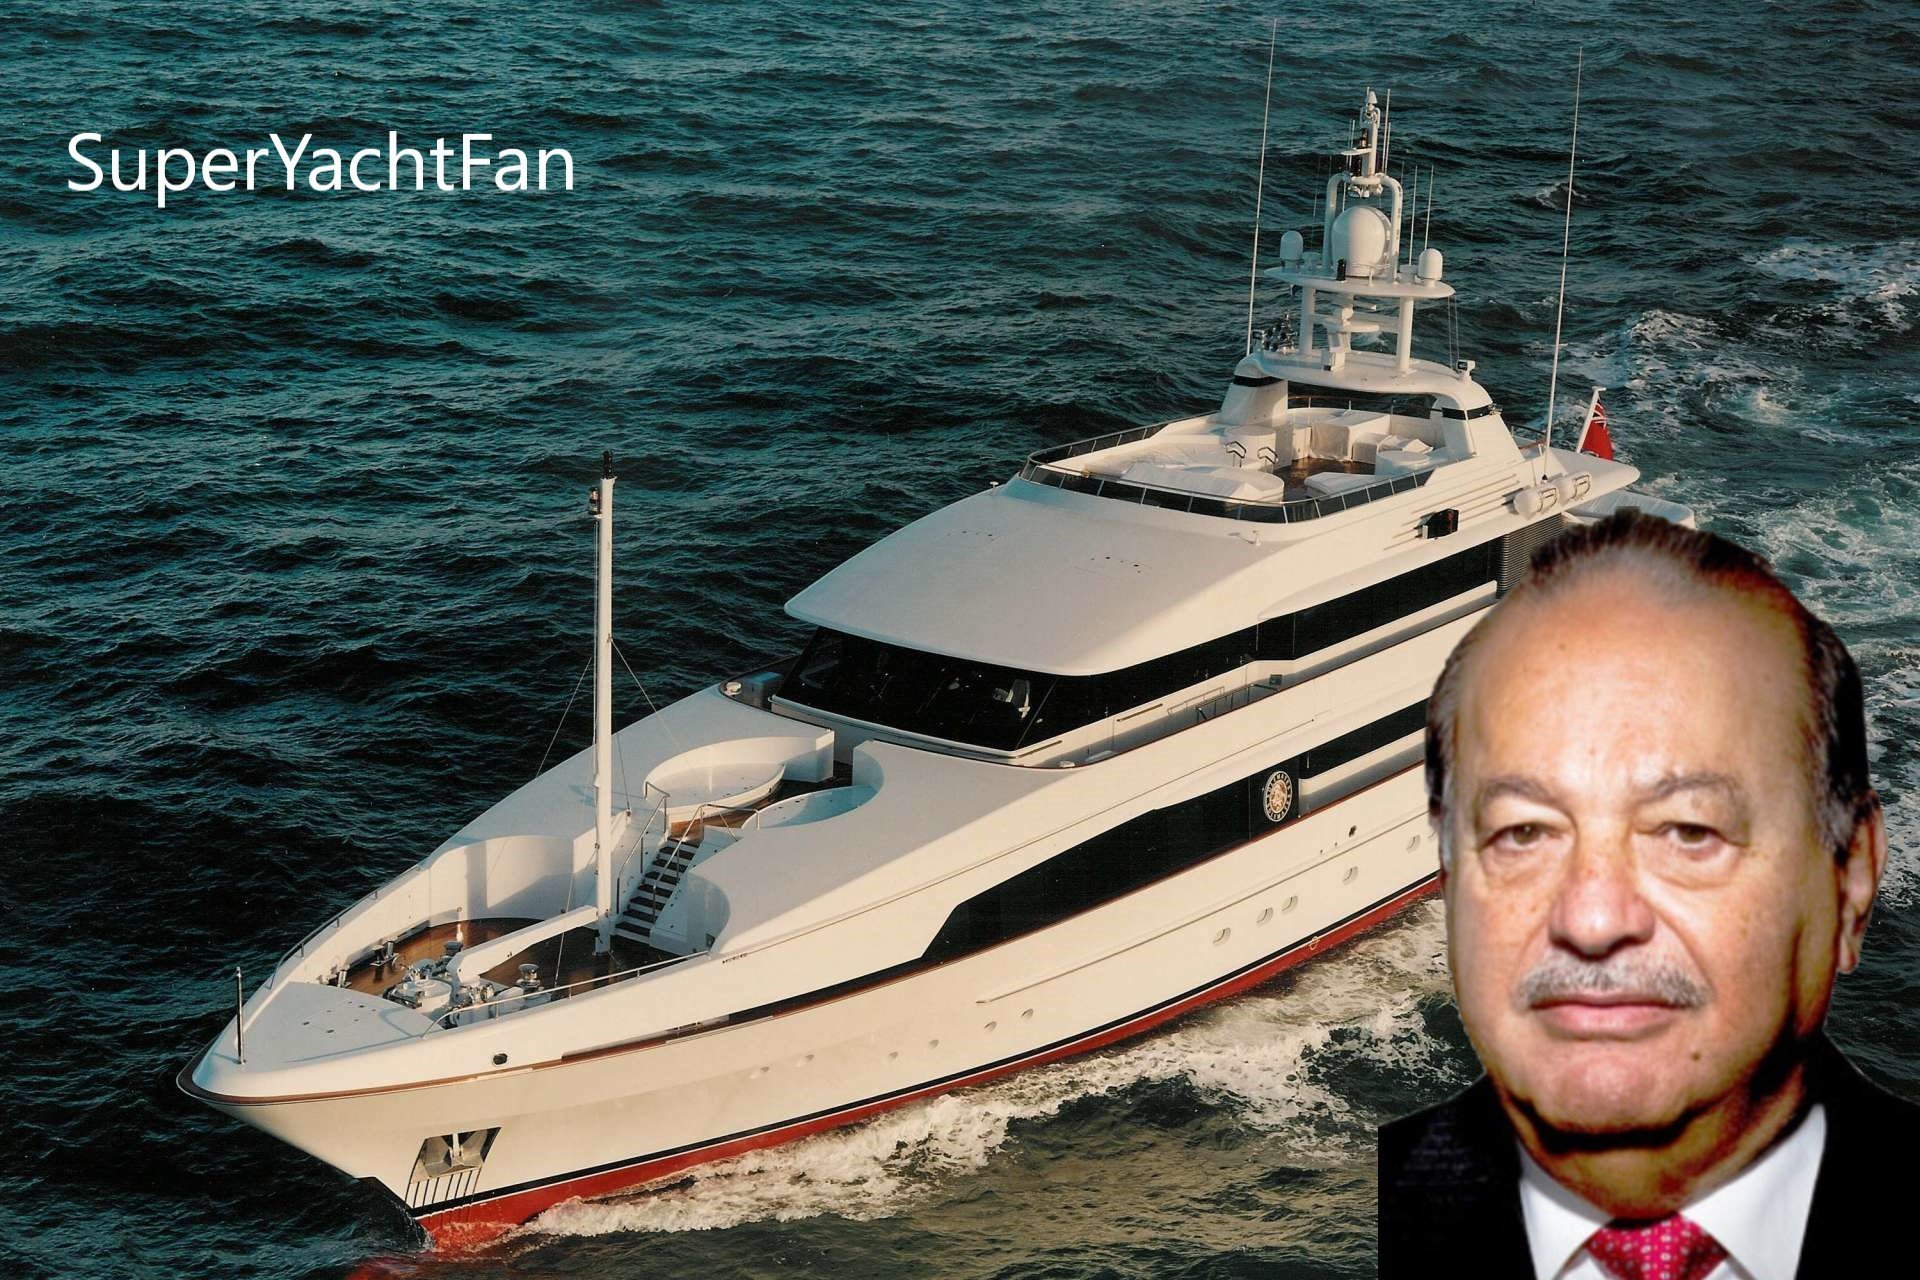 r&r yacht owner